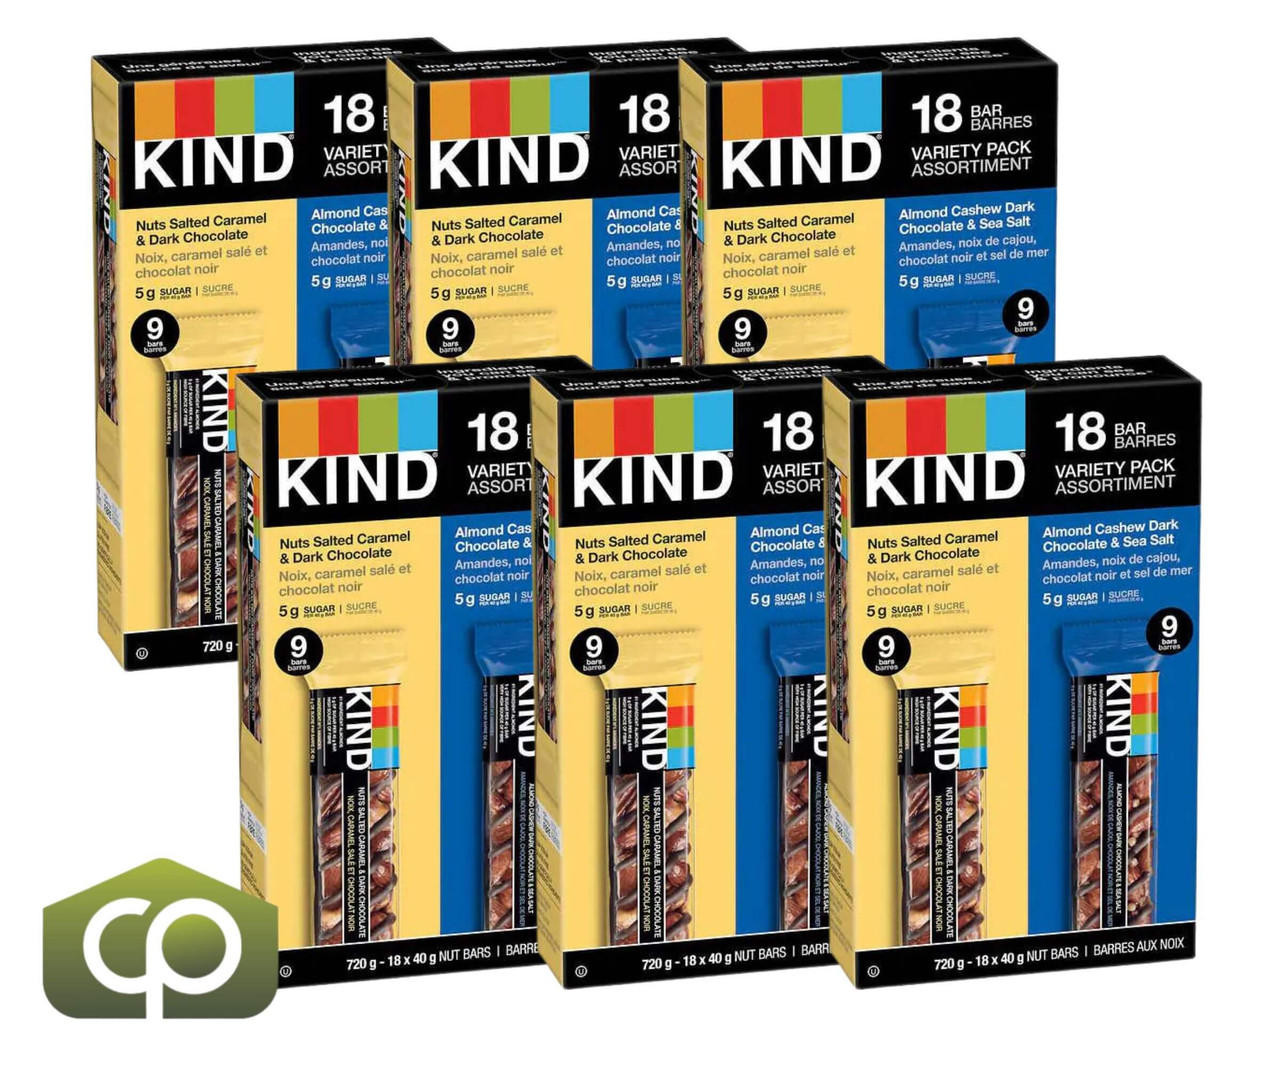 KIND Kind Nut Bars Variety Pack - 18 Bars x 40g, Real Ingredients, Low Sugar (6/Case) 